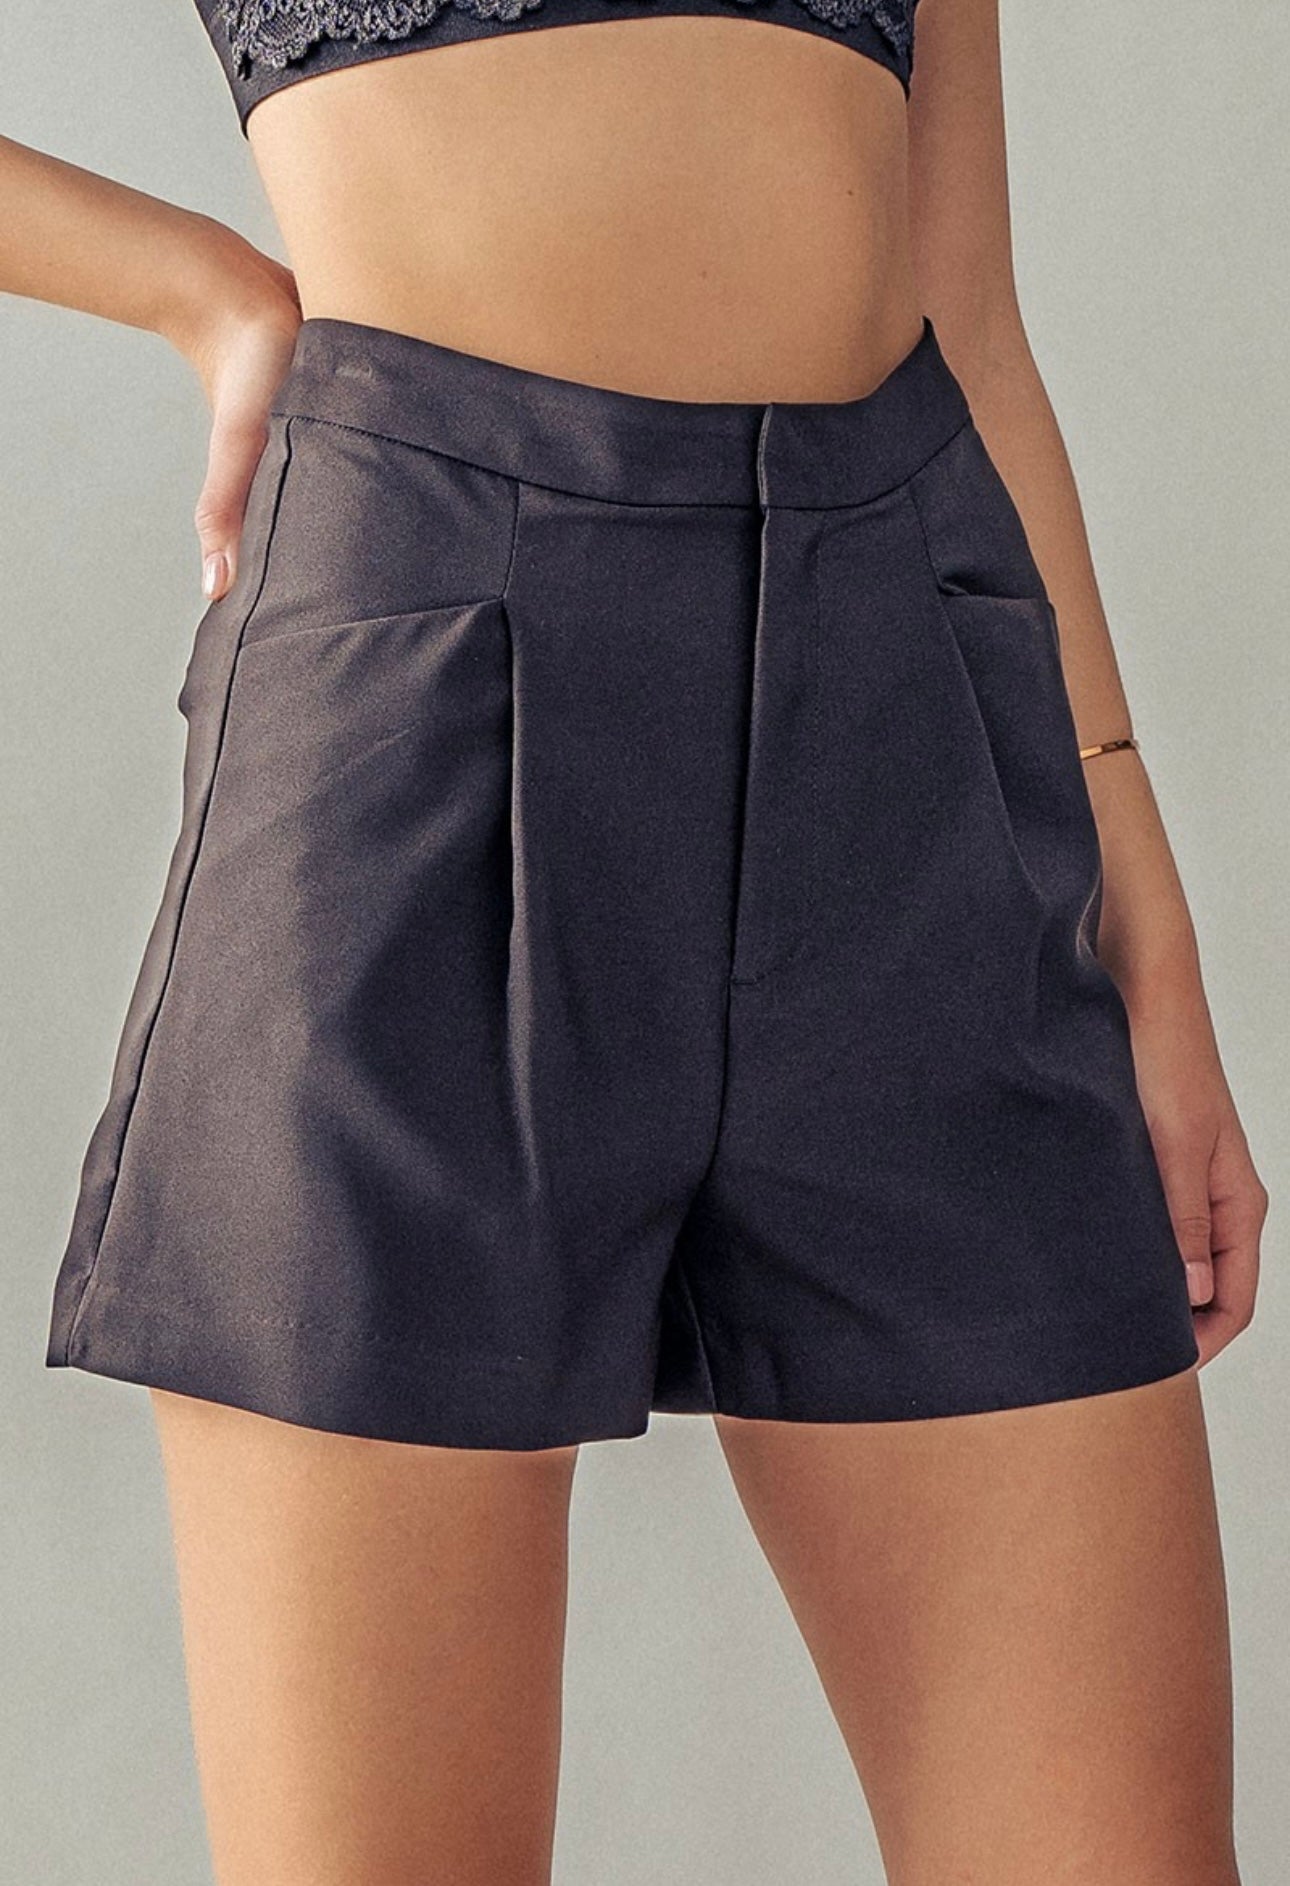 Cassandra dress shorts